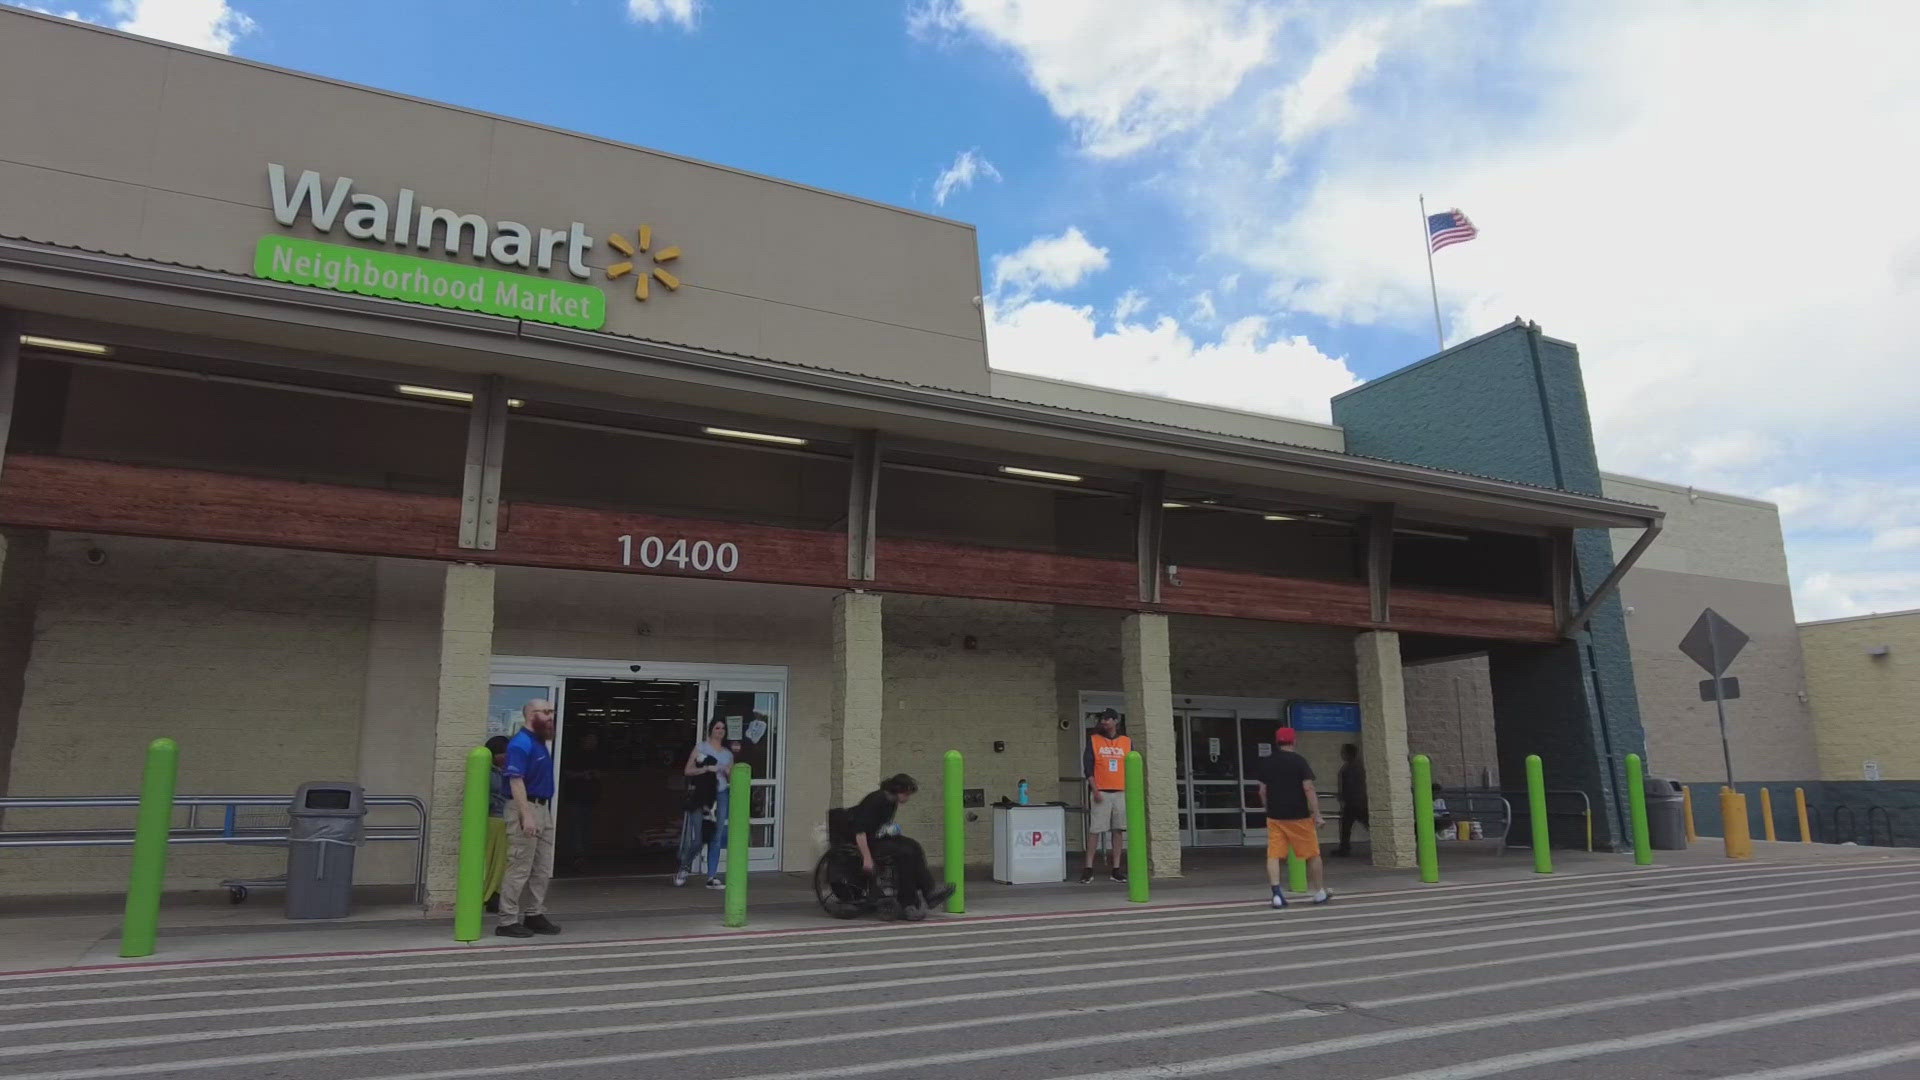 Walmart announced it will close its neighborhood market store at Colfax & Havana next month.